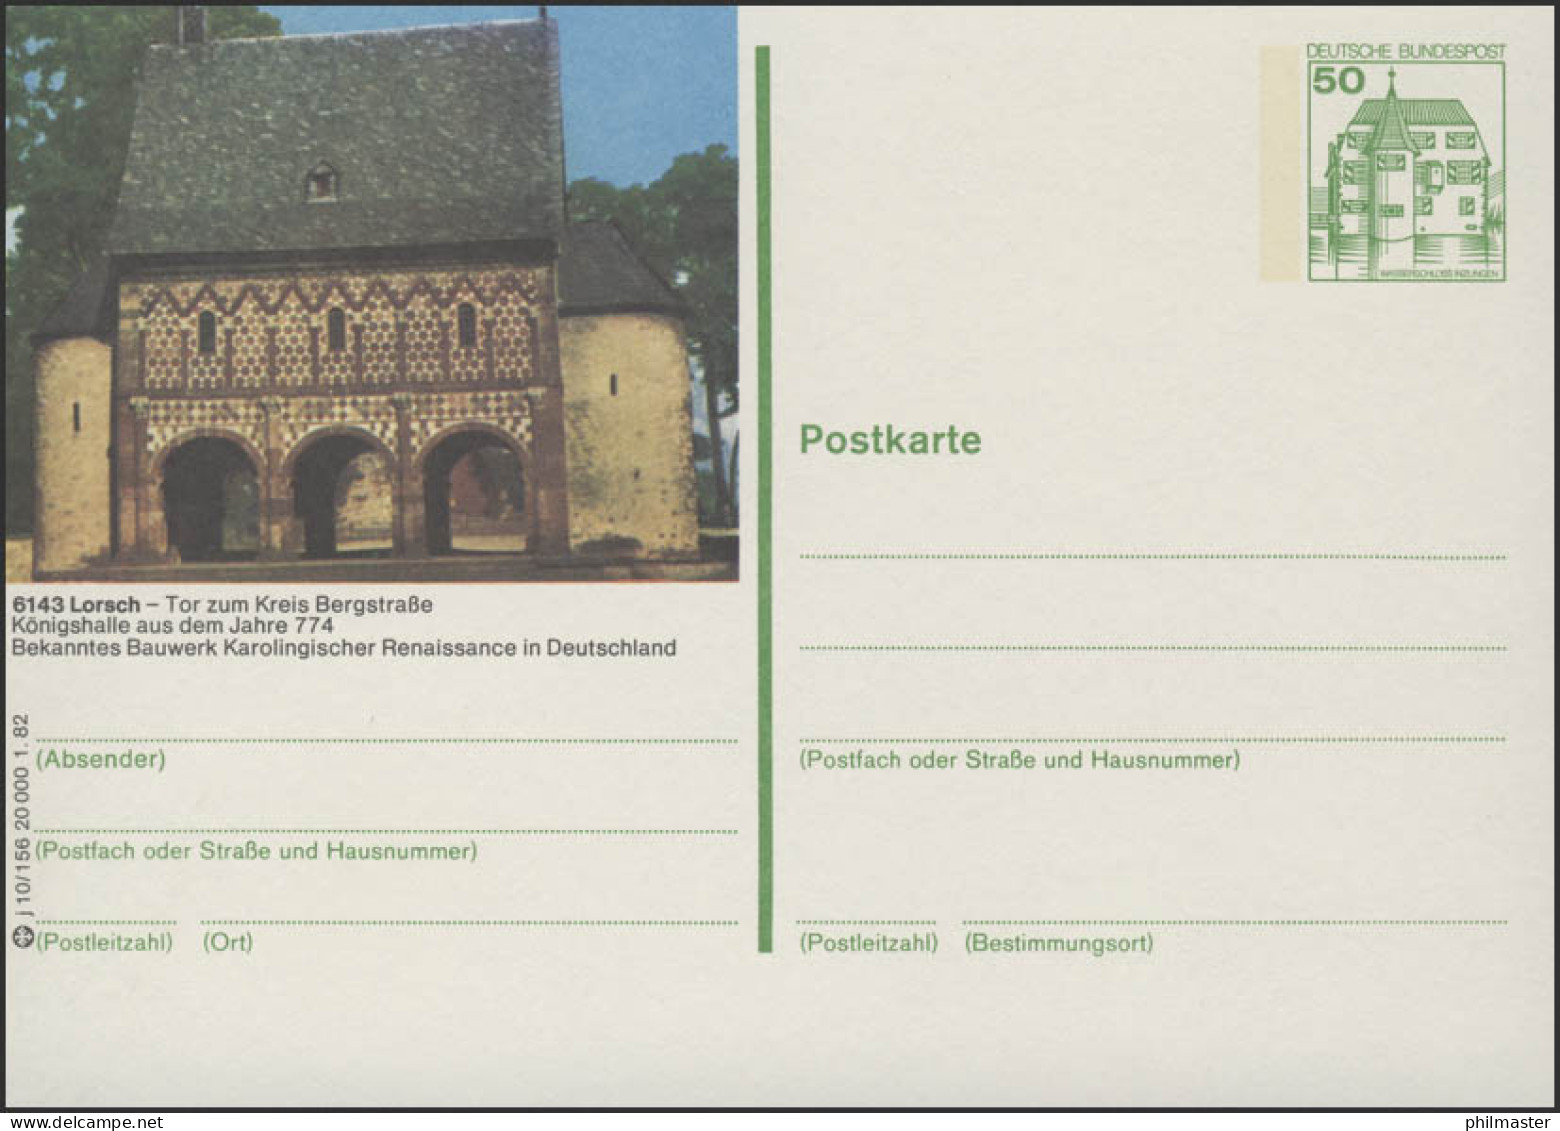 P134-j10/156 6143 Lorsch - Königshalle ** - Illustrated Postcards - Mint